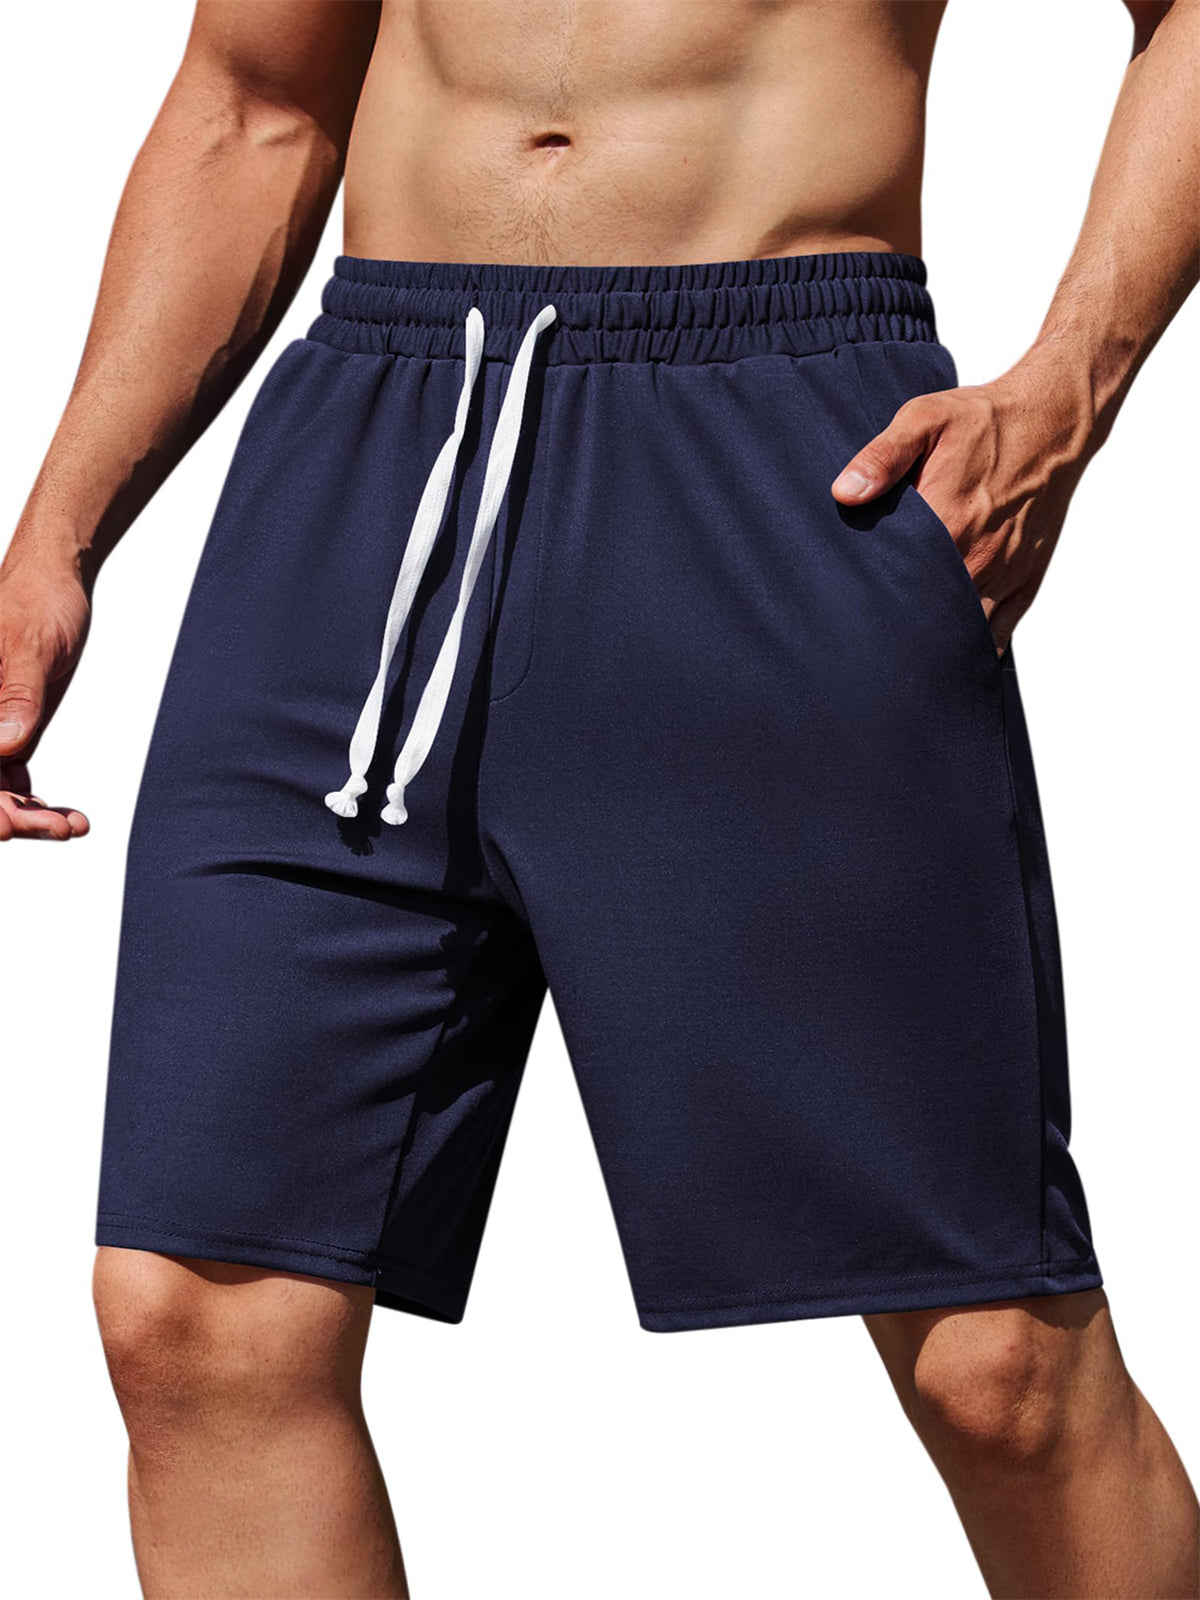 Men's Cotton Pocket Knit Elastic Casual Daily Shorts